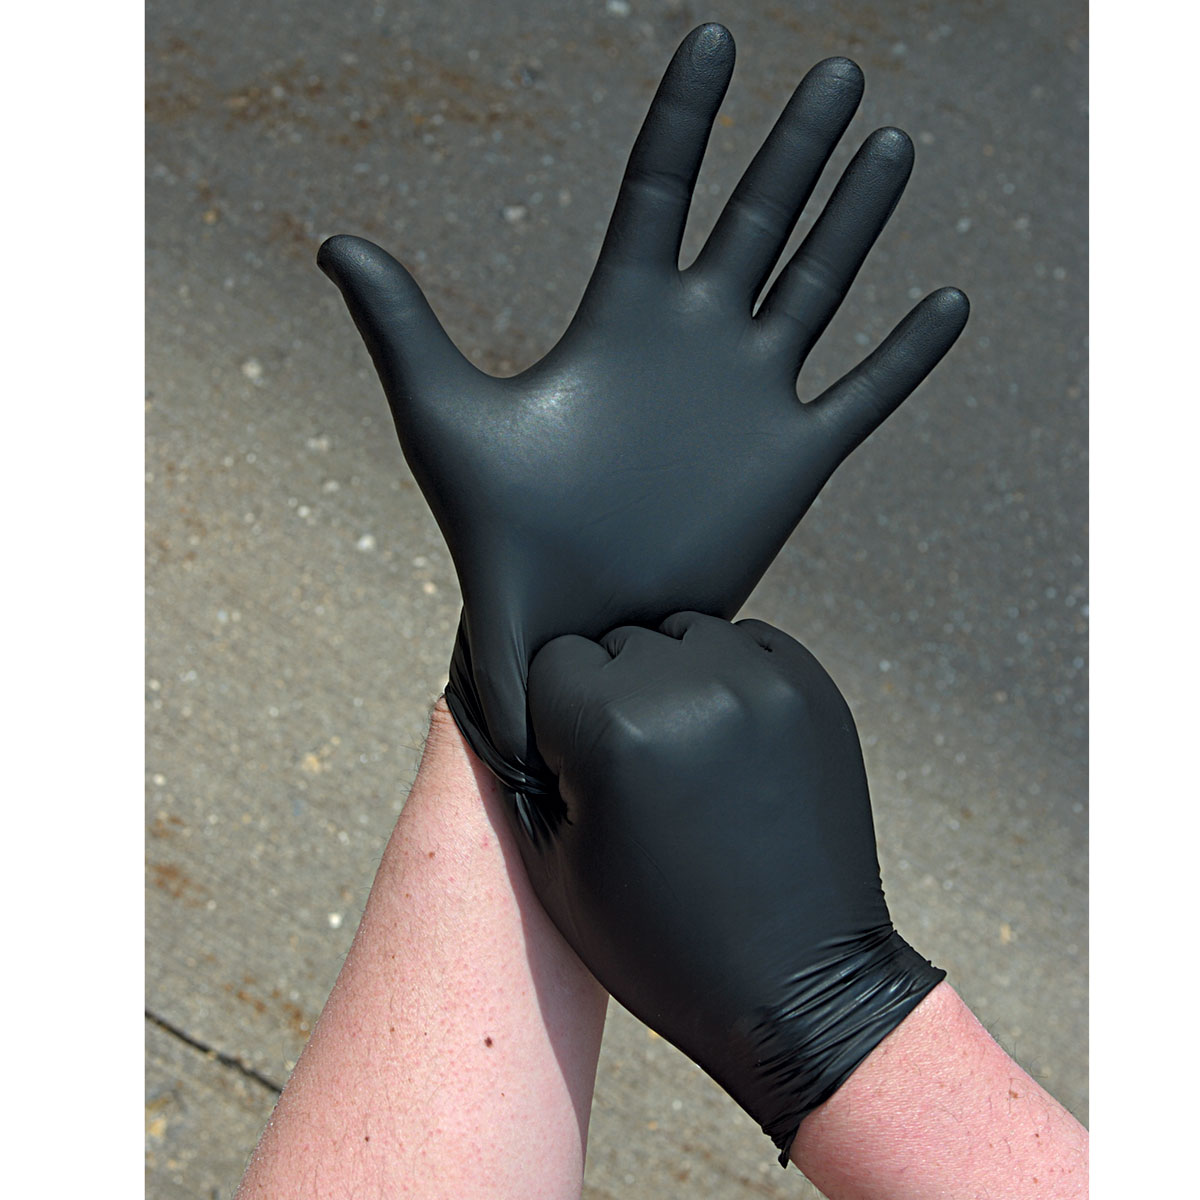 Gloves Black Nitrile Powder Free XX-Large5-6mil 10/100ctGPNB - Sold by EA